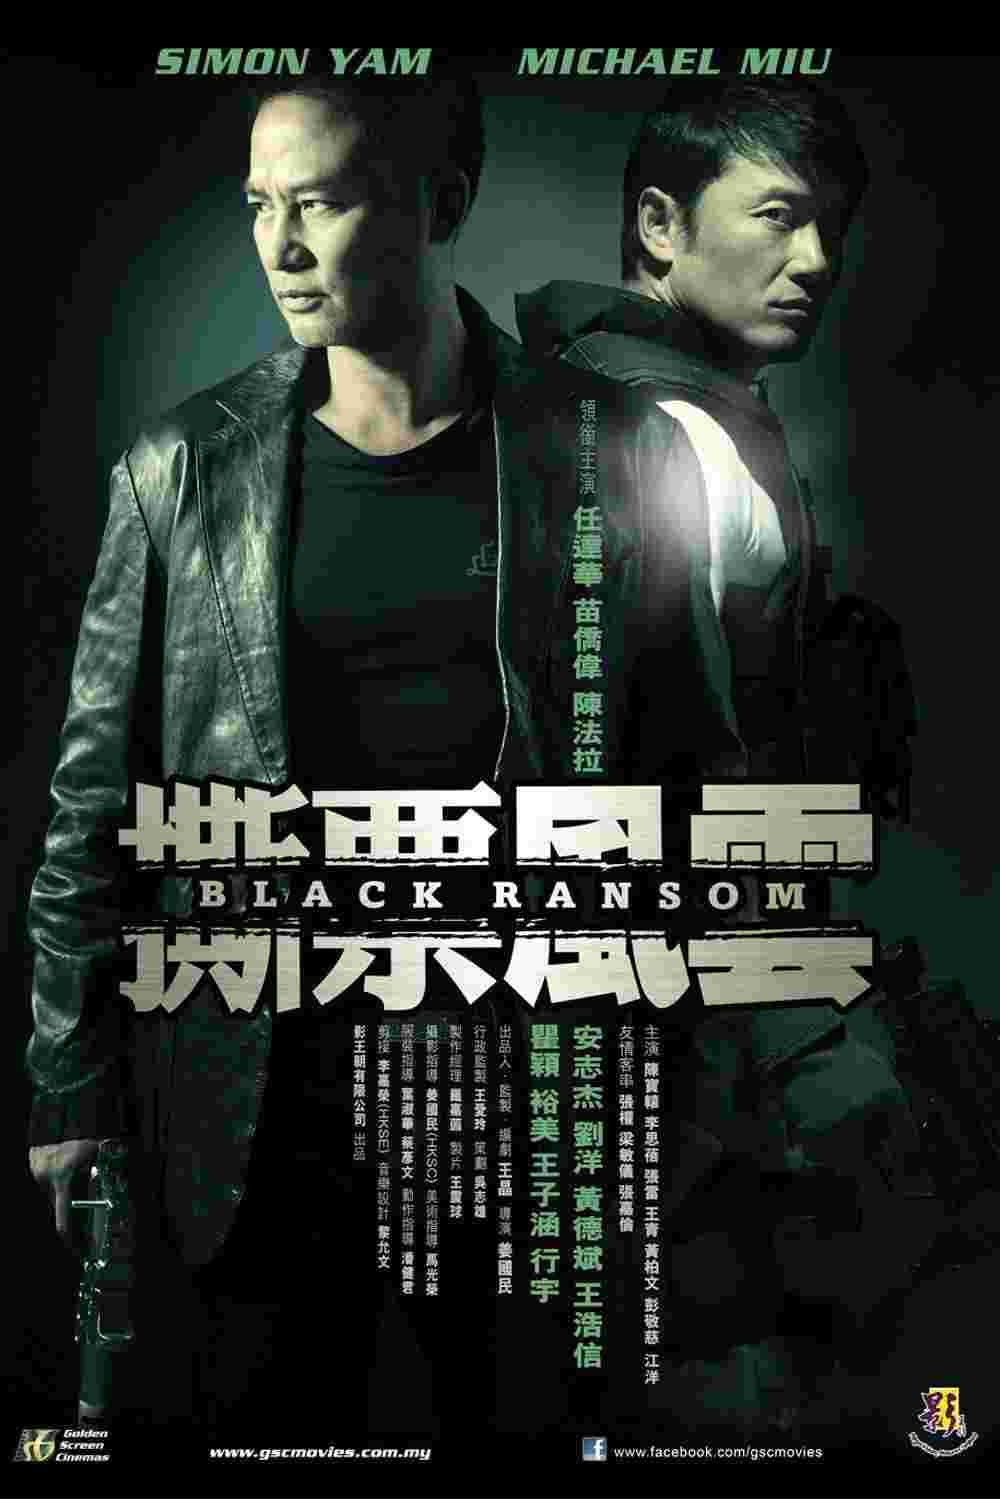 Black Ransom (2010) Simon Yam